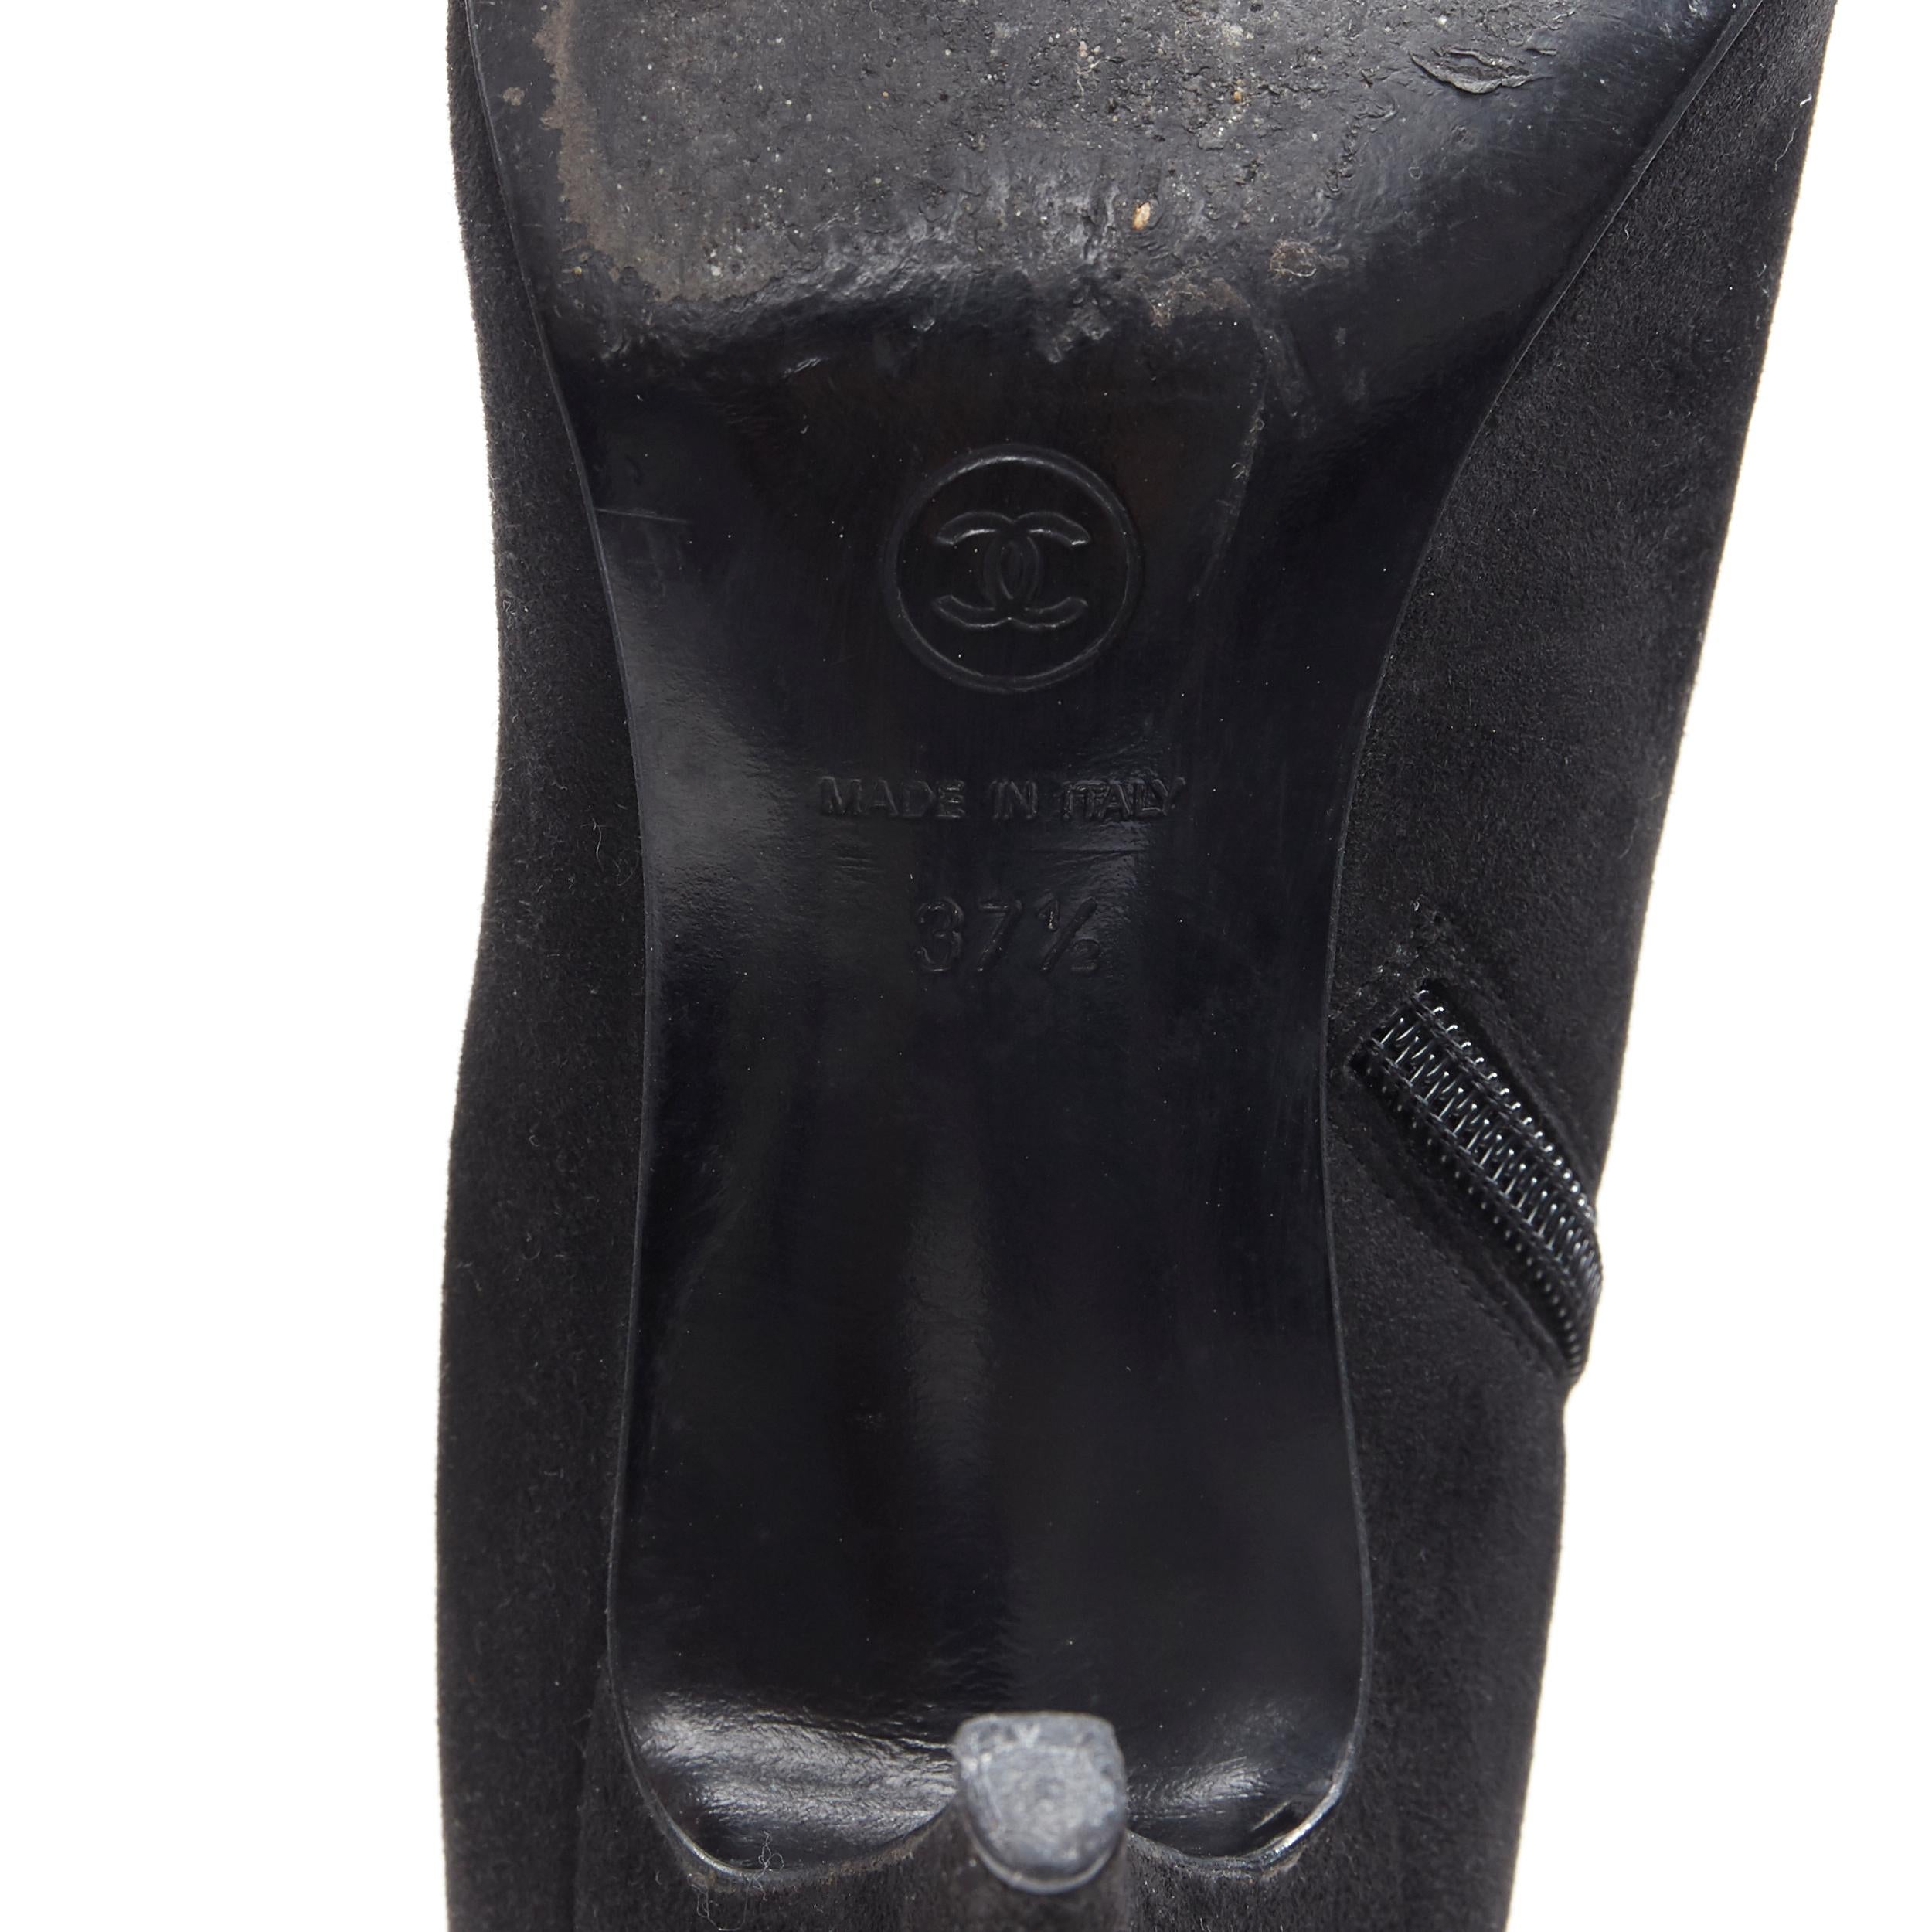 CHANEL black suede silver CC metal toe cap high heel ankle bootie EU37.5 7